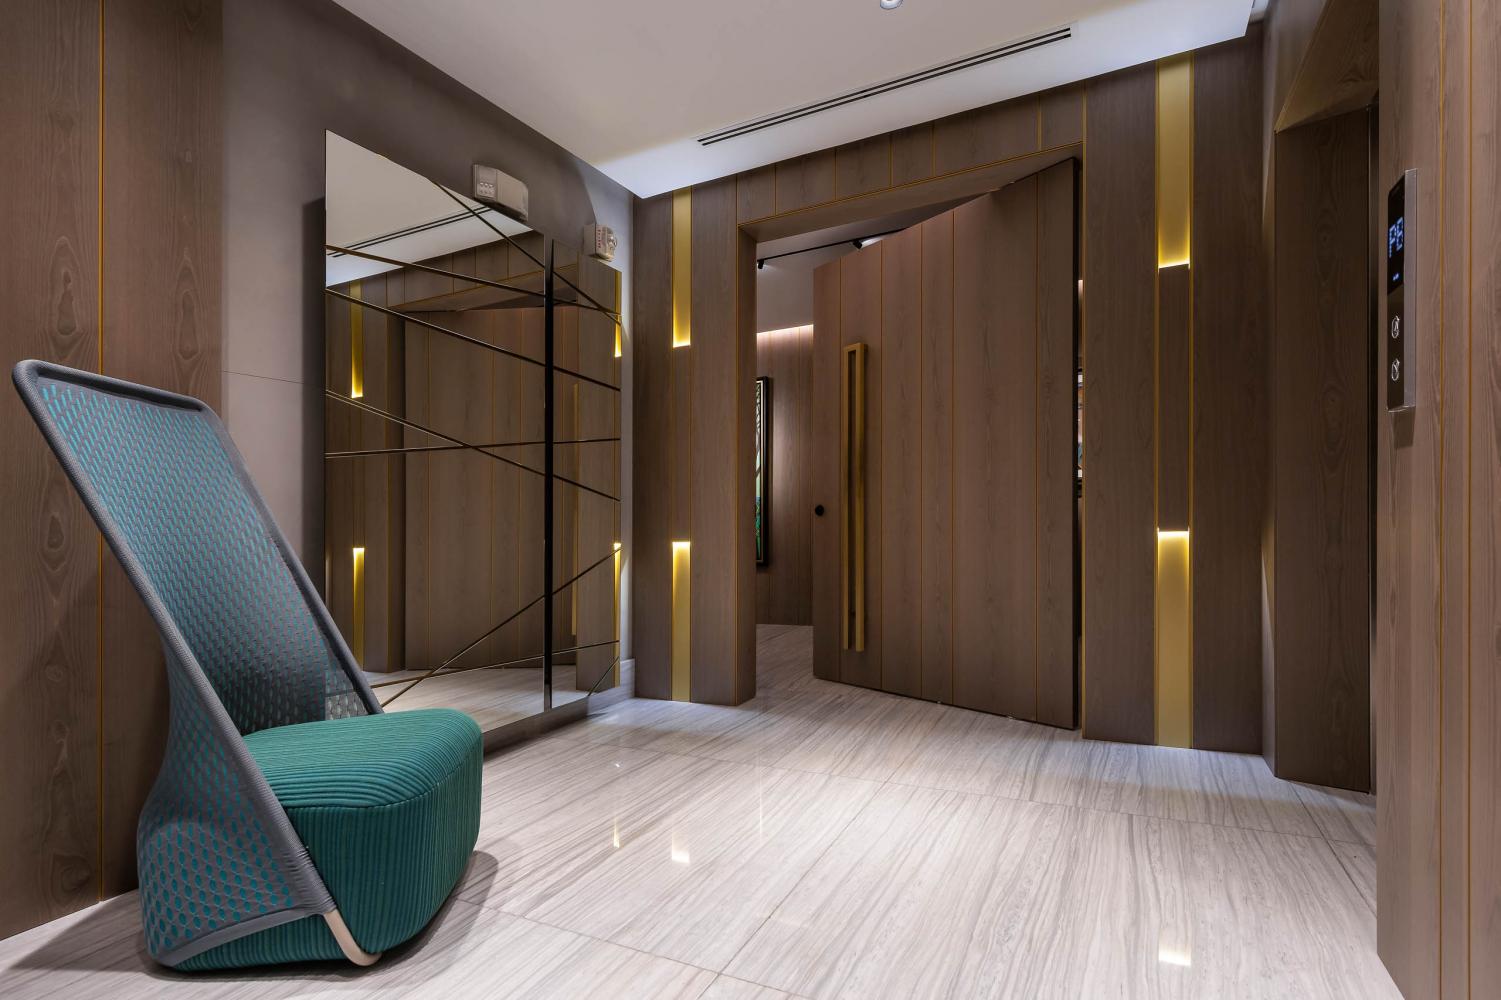 laurameroni exclusive made to measure furniture in a luxury contemporary loft in panama coco del mar